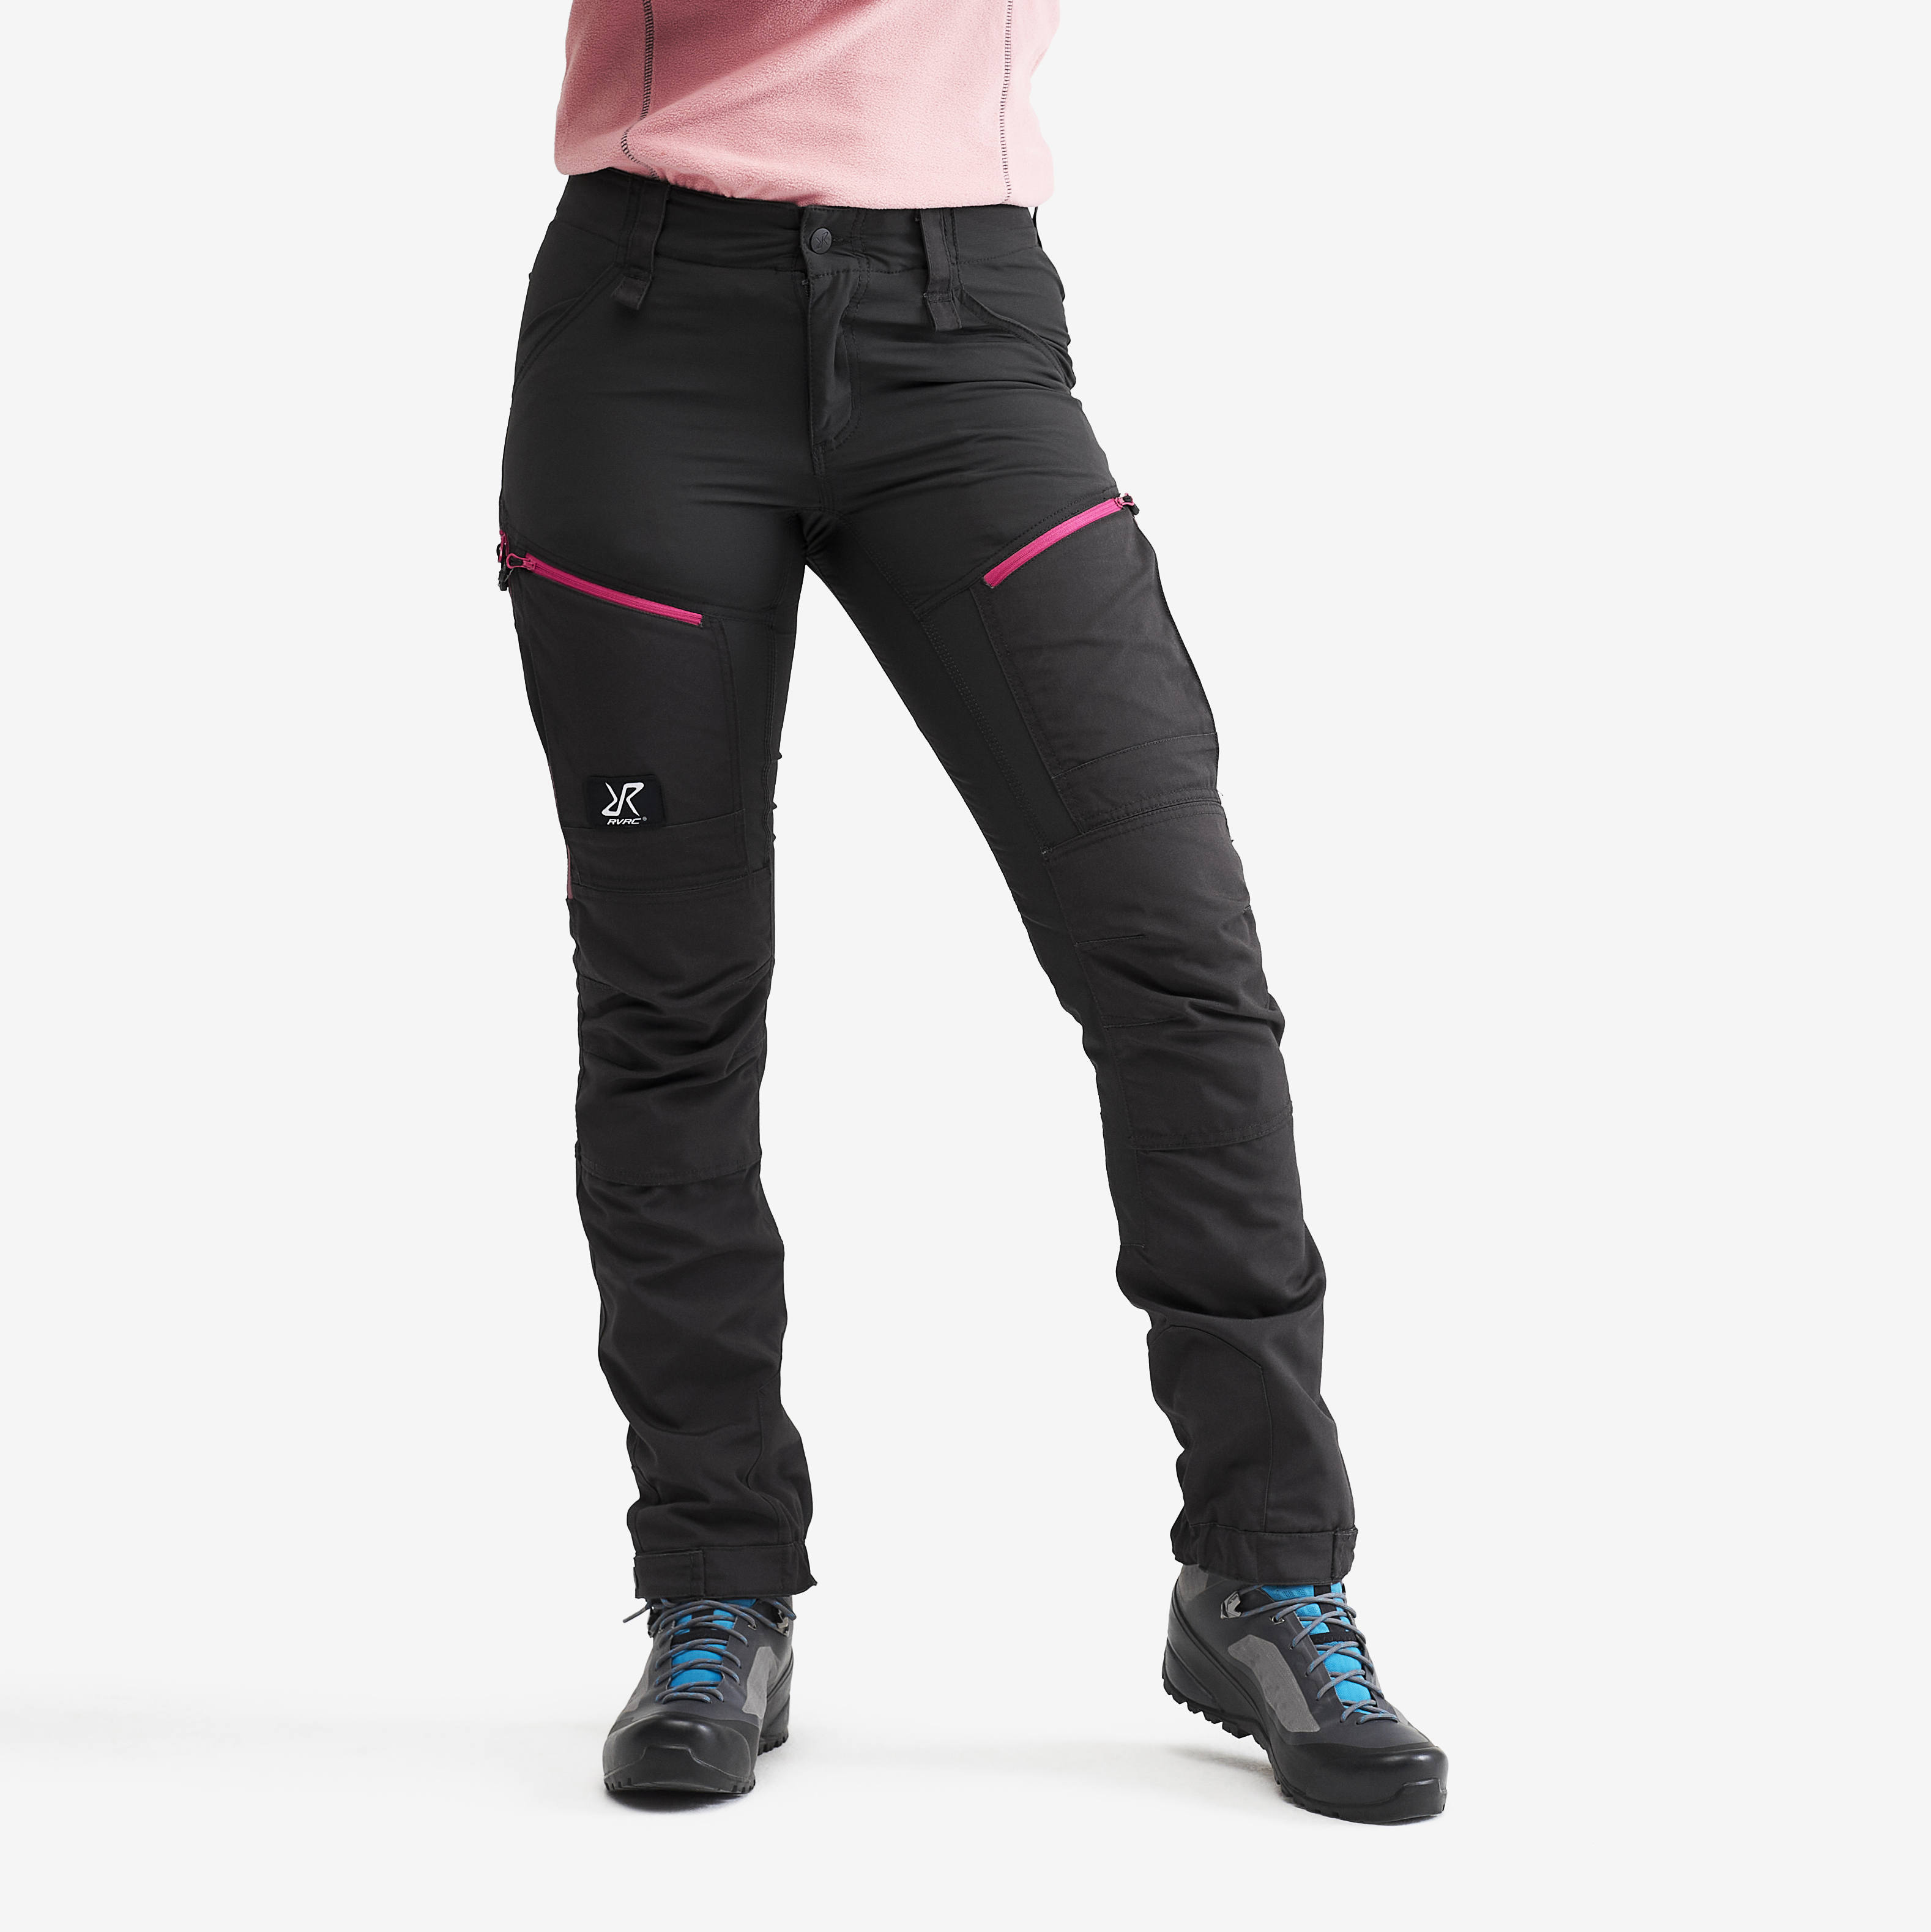 RVRC GP Pro Trousers Grey/Pink Women